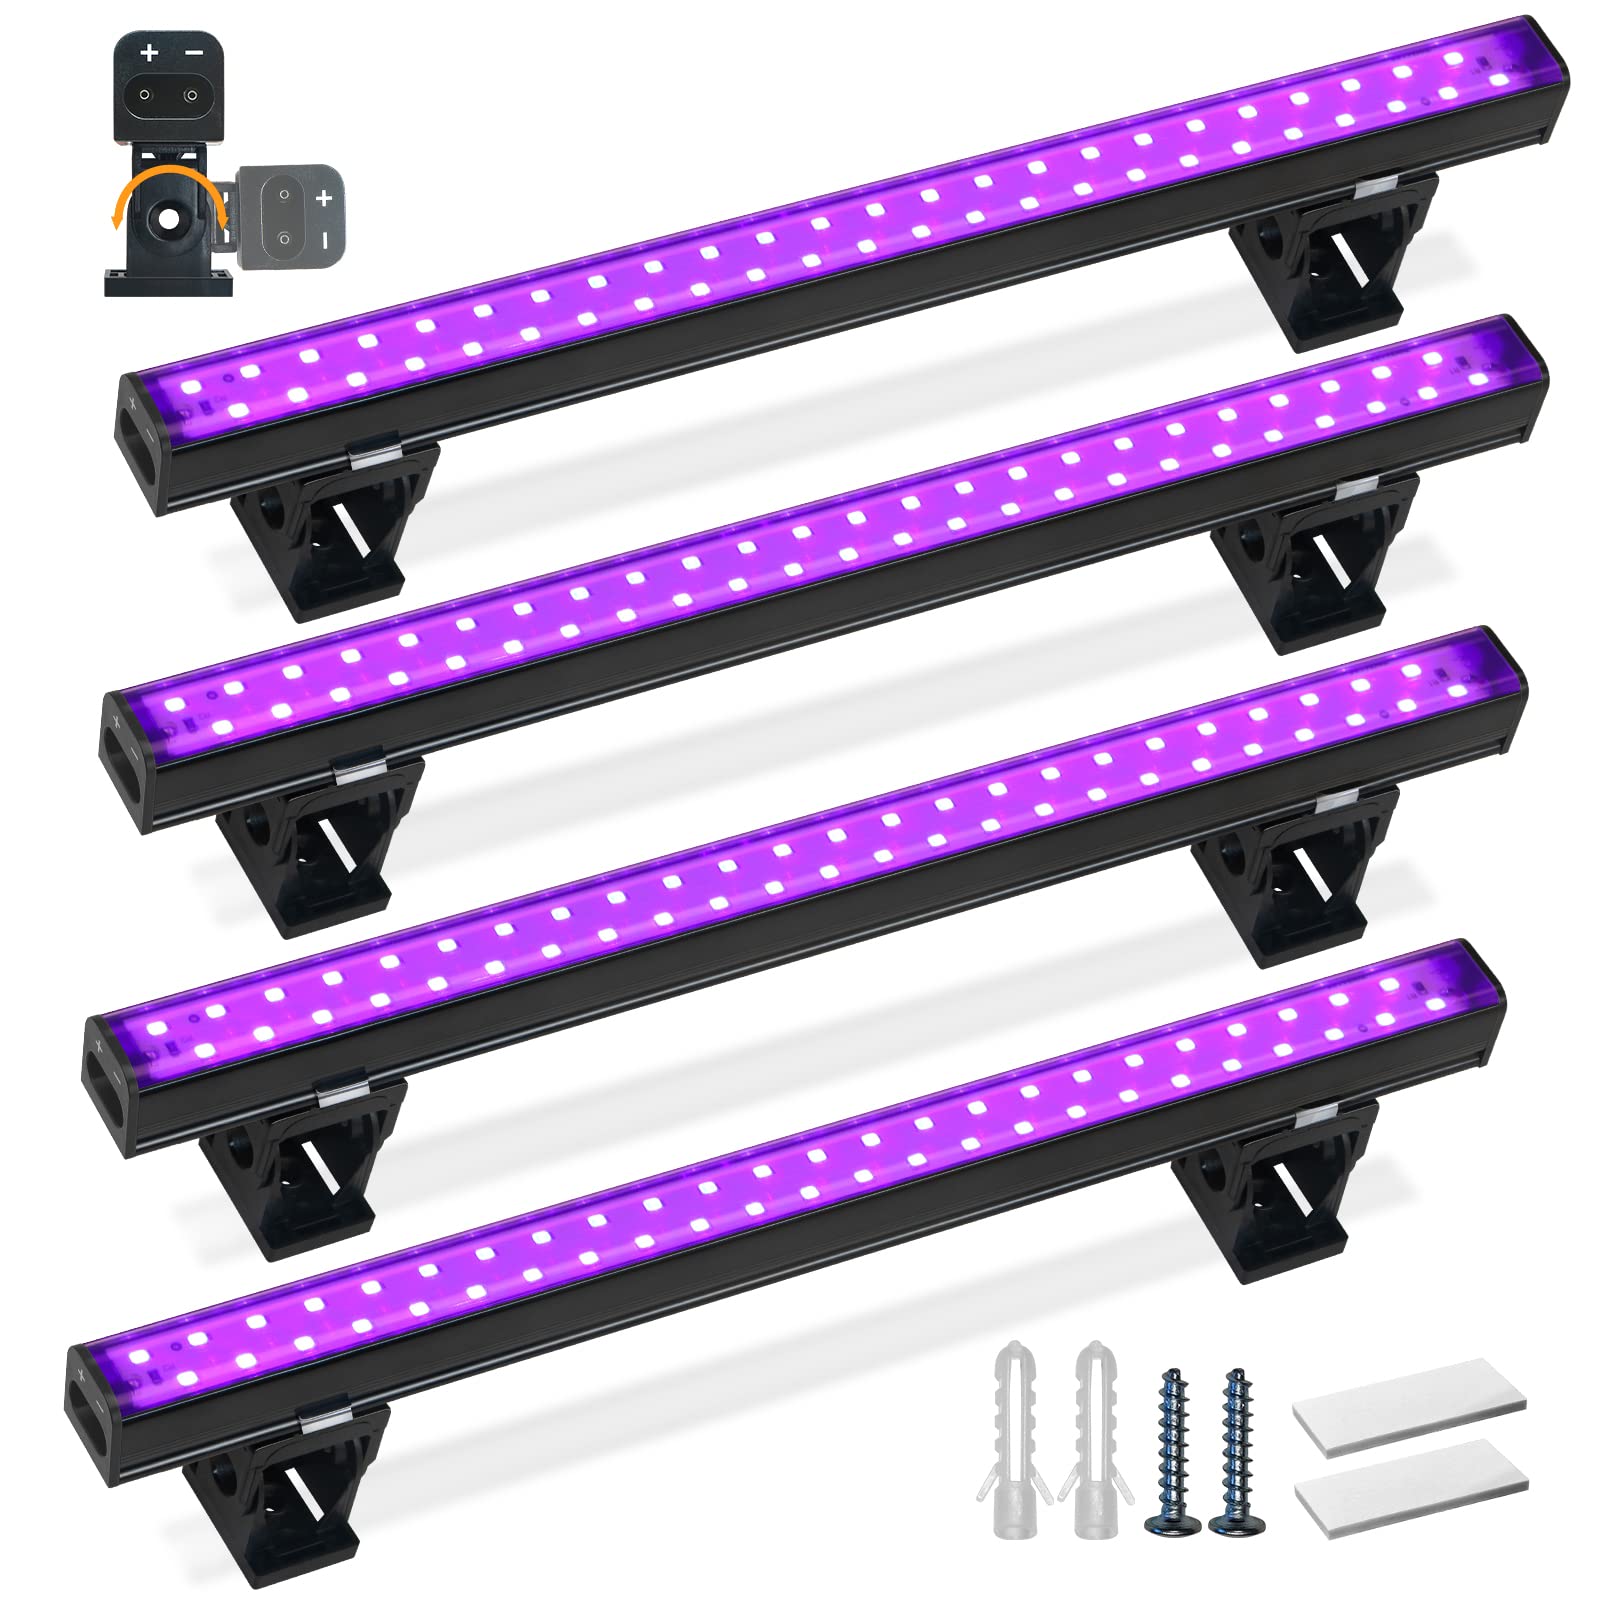 T5 LED Black Lights,1FT,10W,USB UV LED Light Bar,4 Packs,UC10(Z) - Barrina led